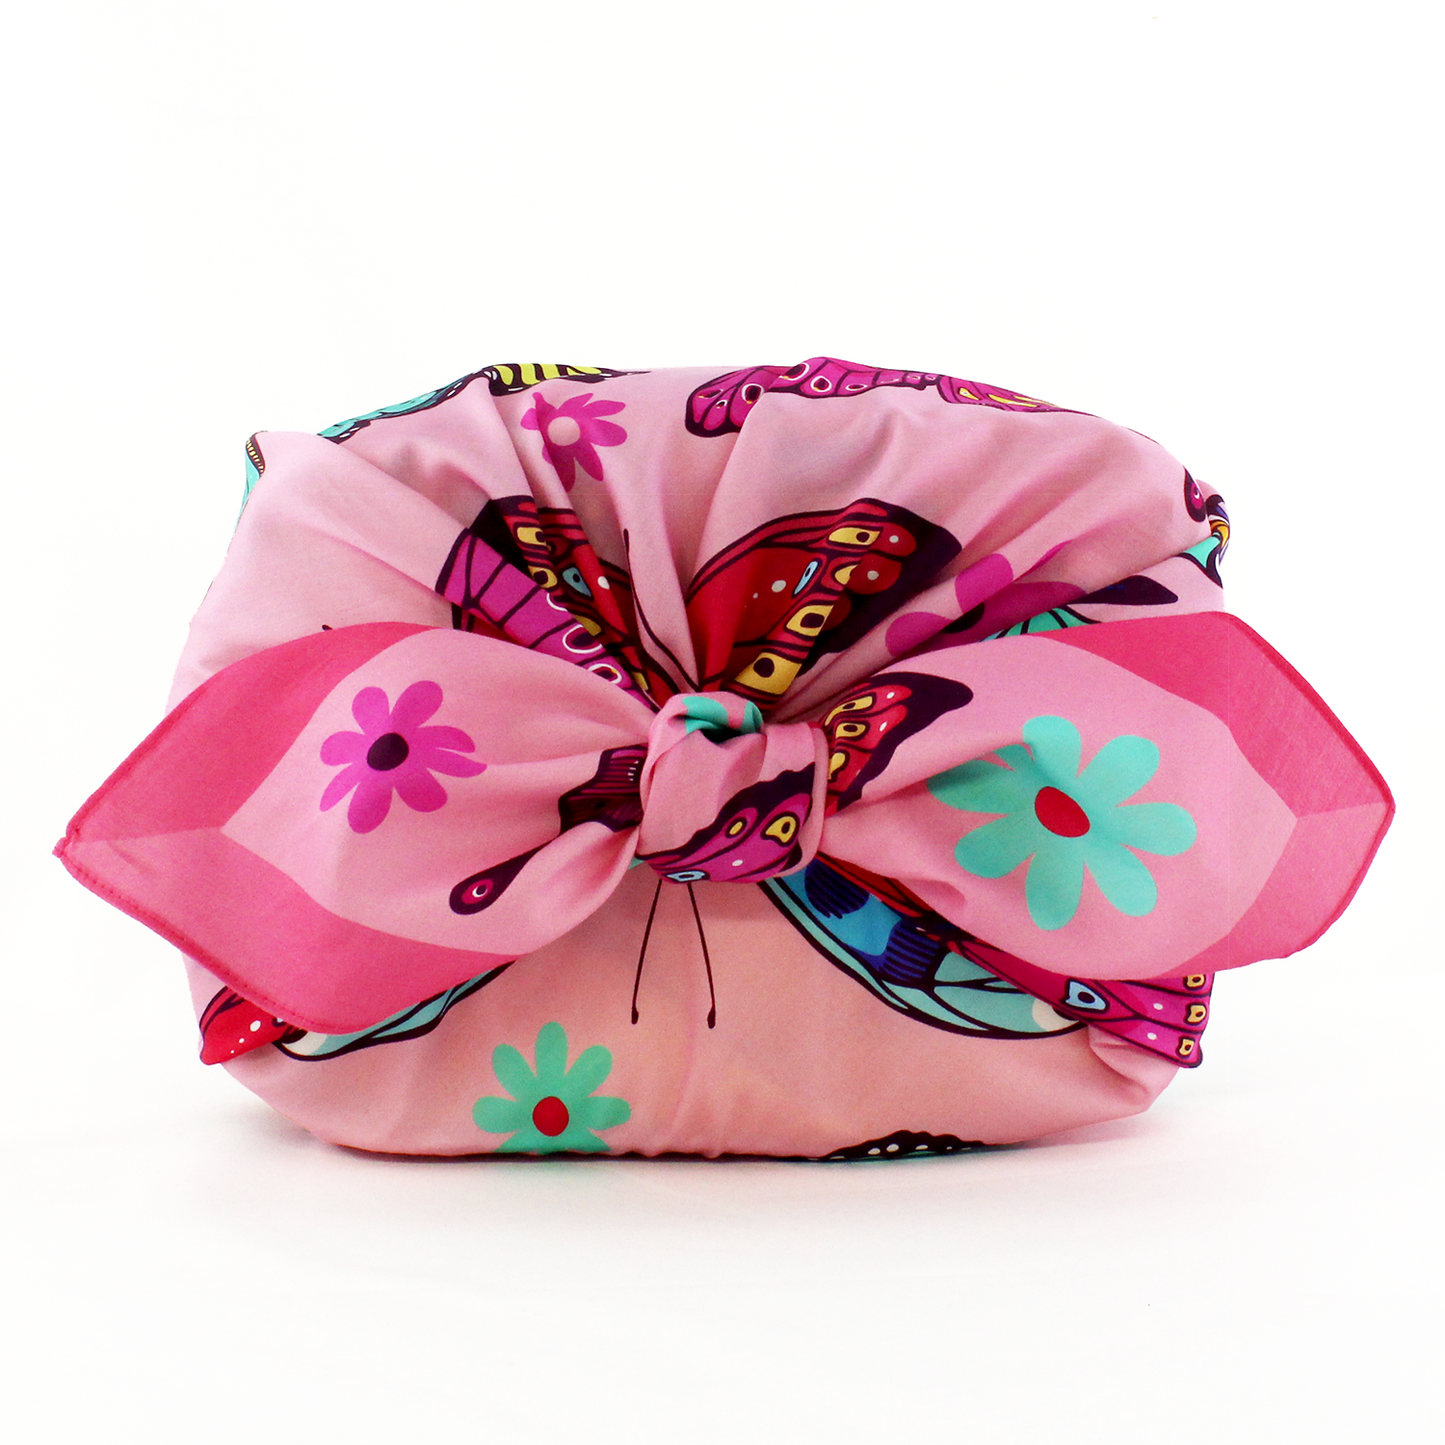 Zeronto Newborn Girl Clothing Gift Box - My First Bunny (Girl)